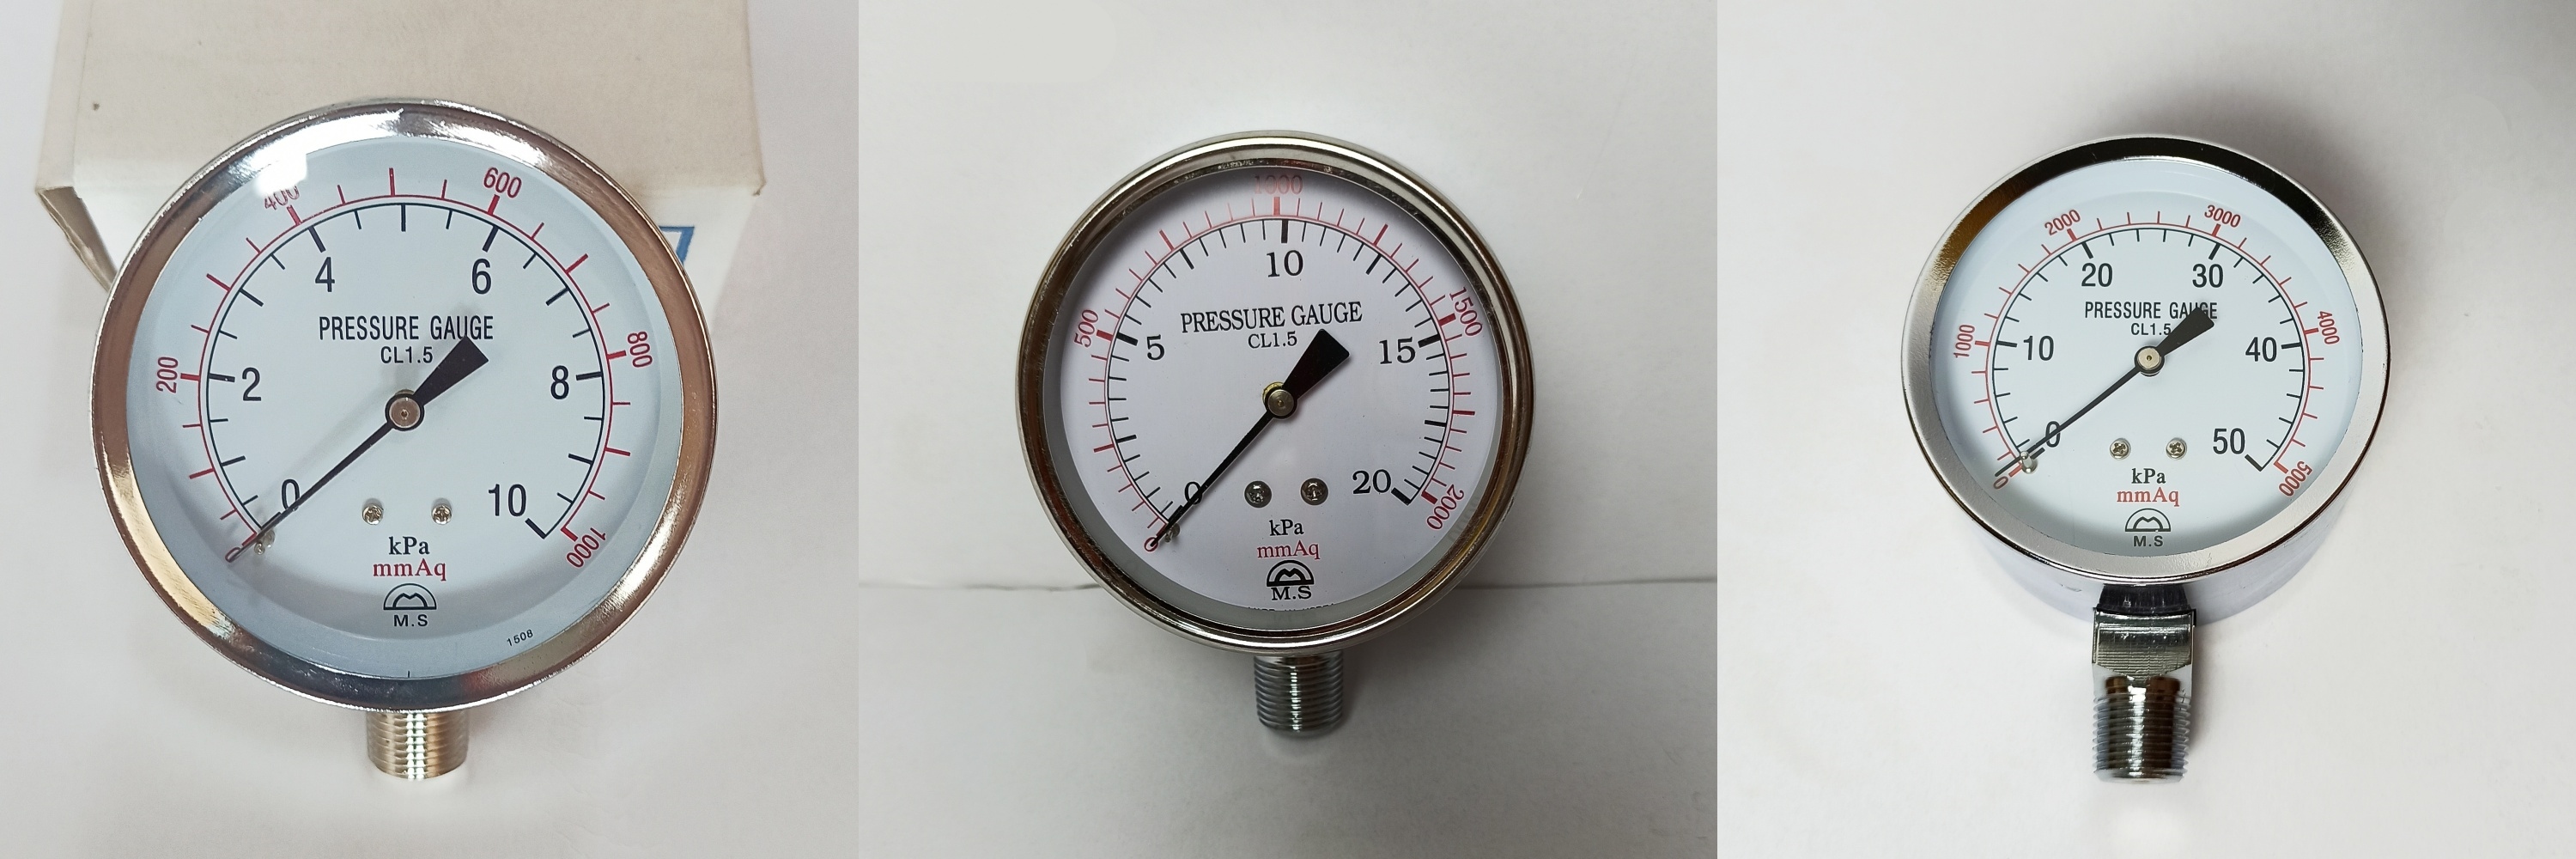 Đồng hồ đo áp suất gas 1000, 2000,5000 mmaq